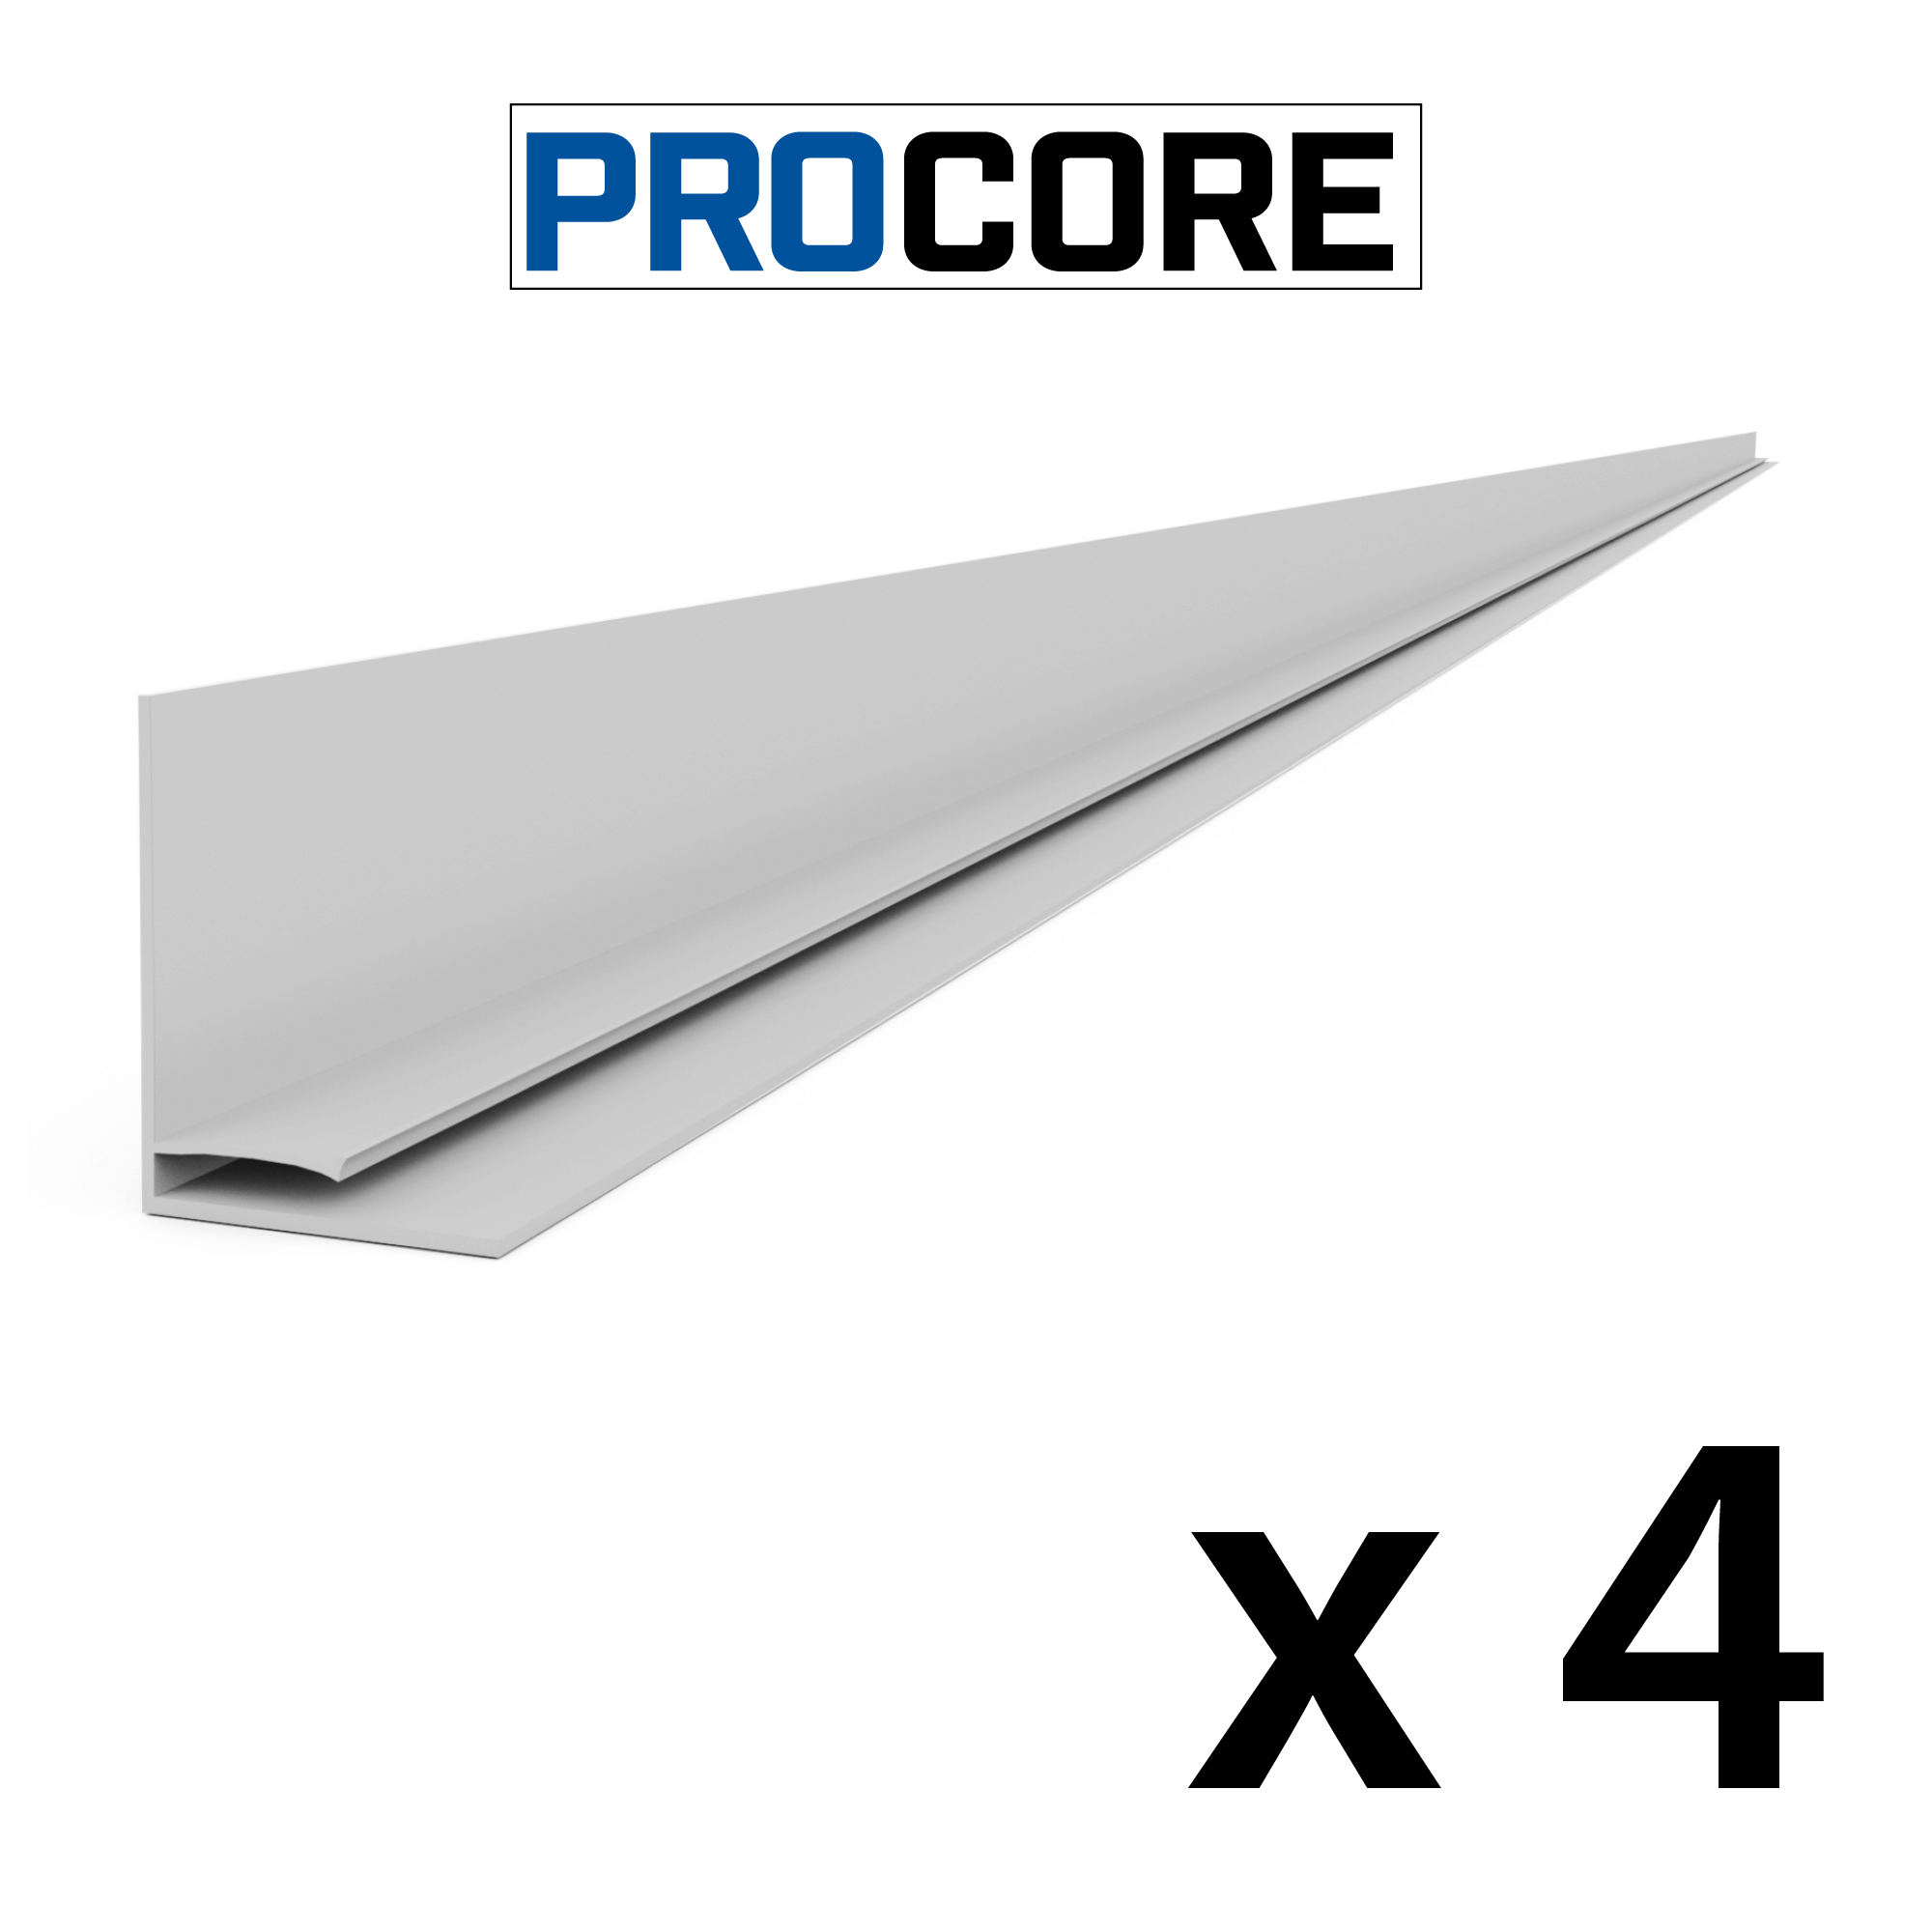 PROCORE PVC Top Trim Pack - Gray